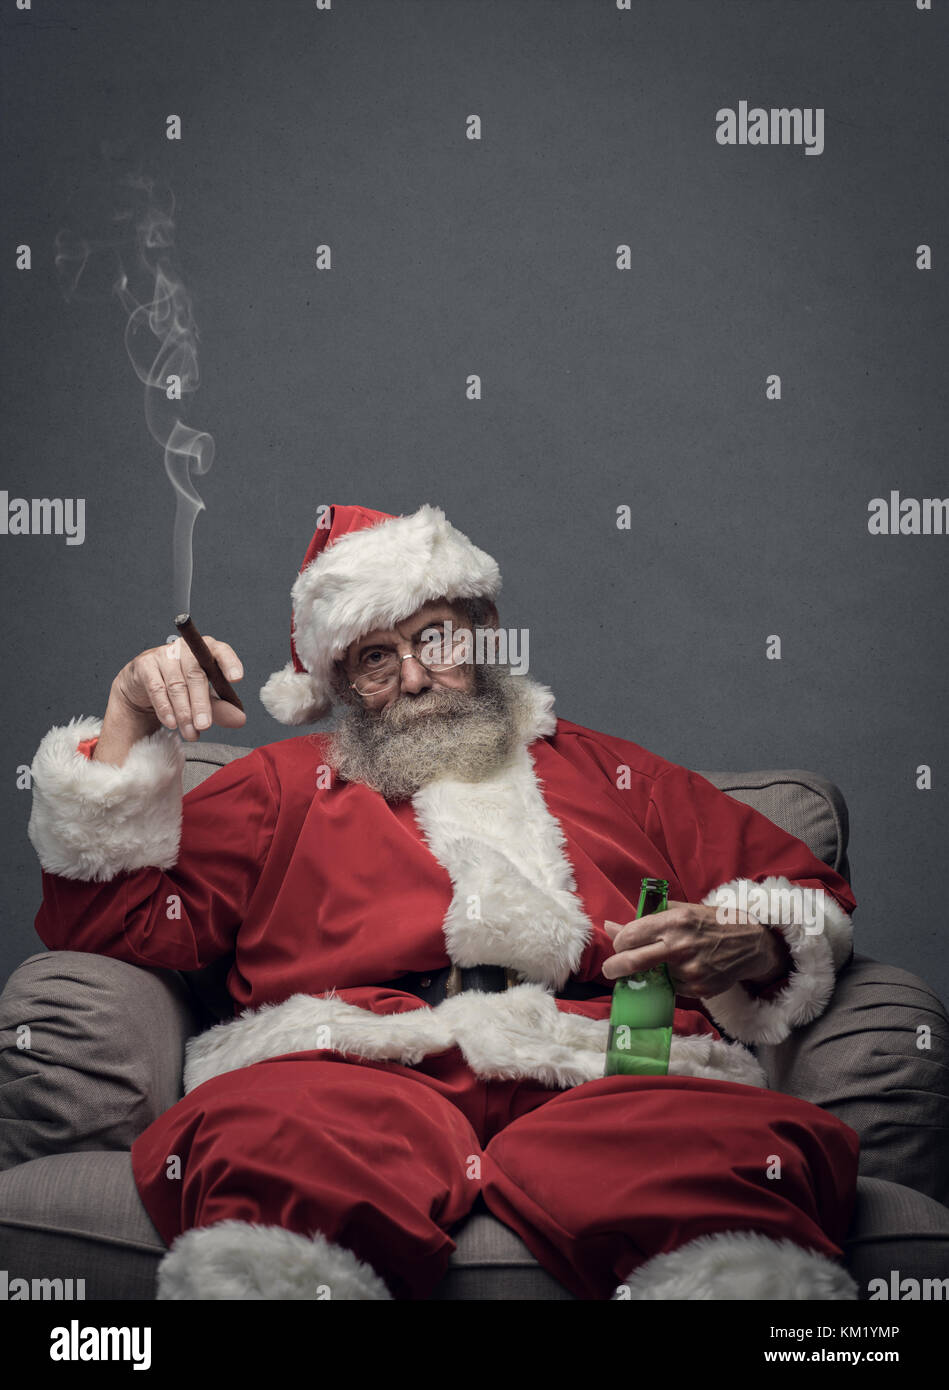 Bad Santa celebrating Christmas at home alone, he is smoking a cigar and drinking beer Stock Photo